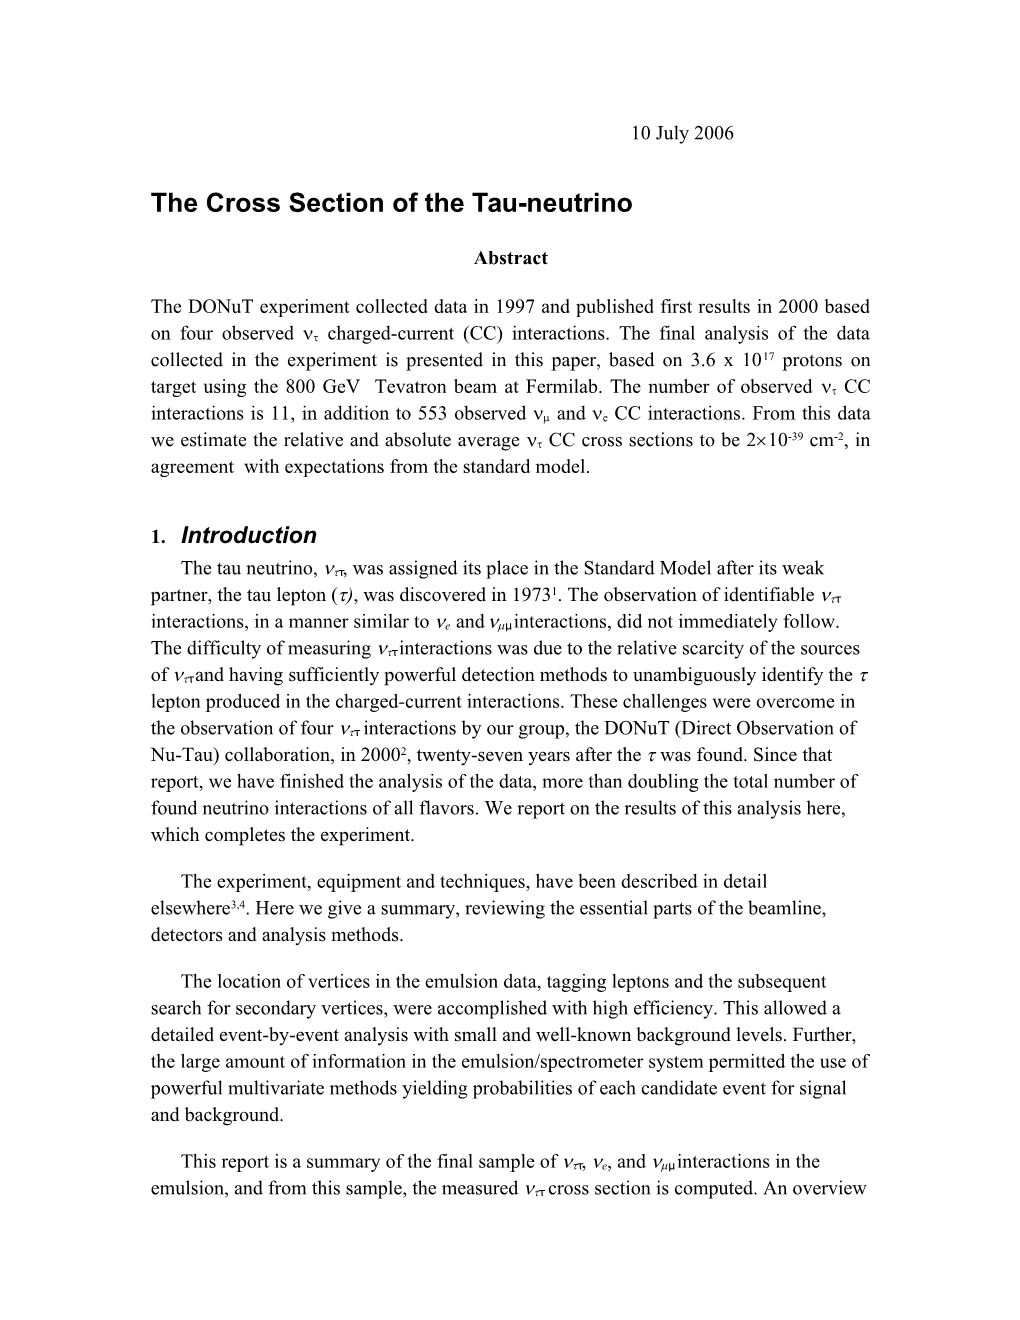 Tau-Neutrino Cross Section